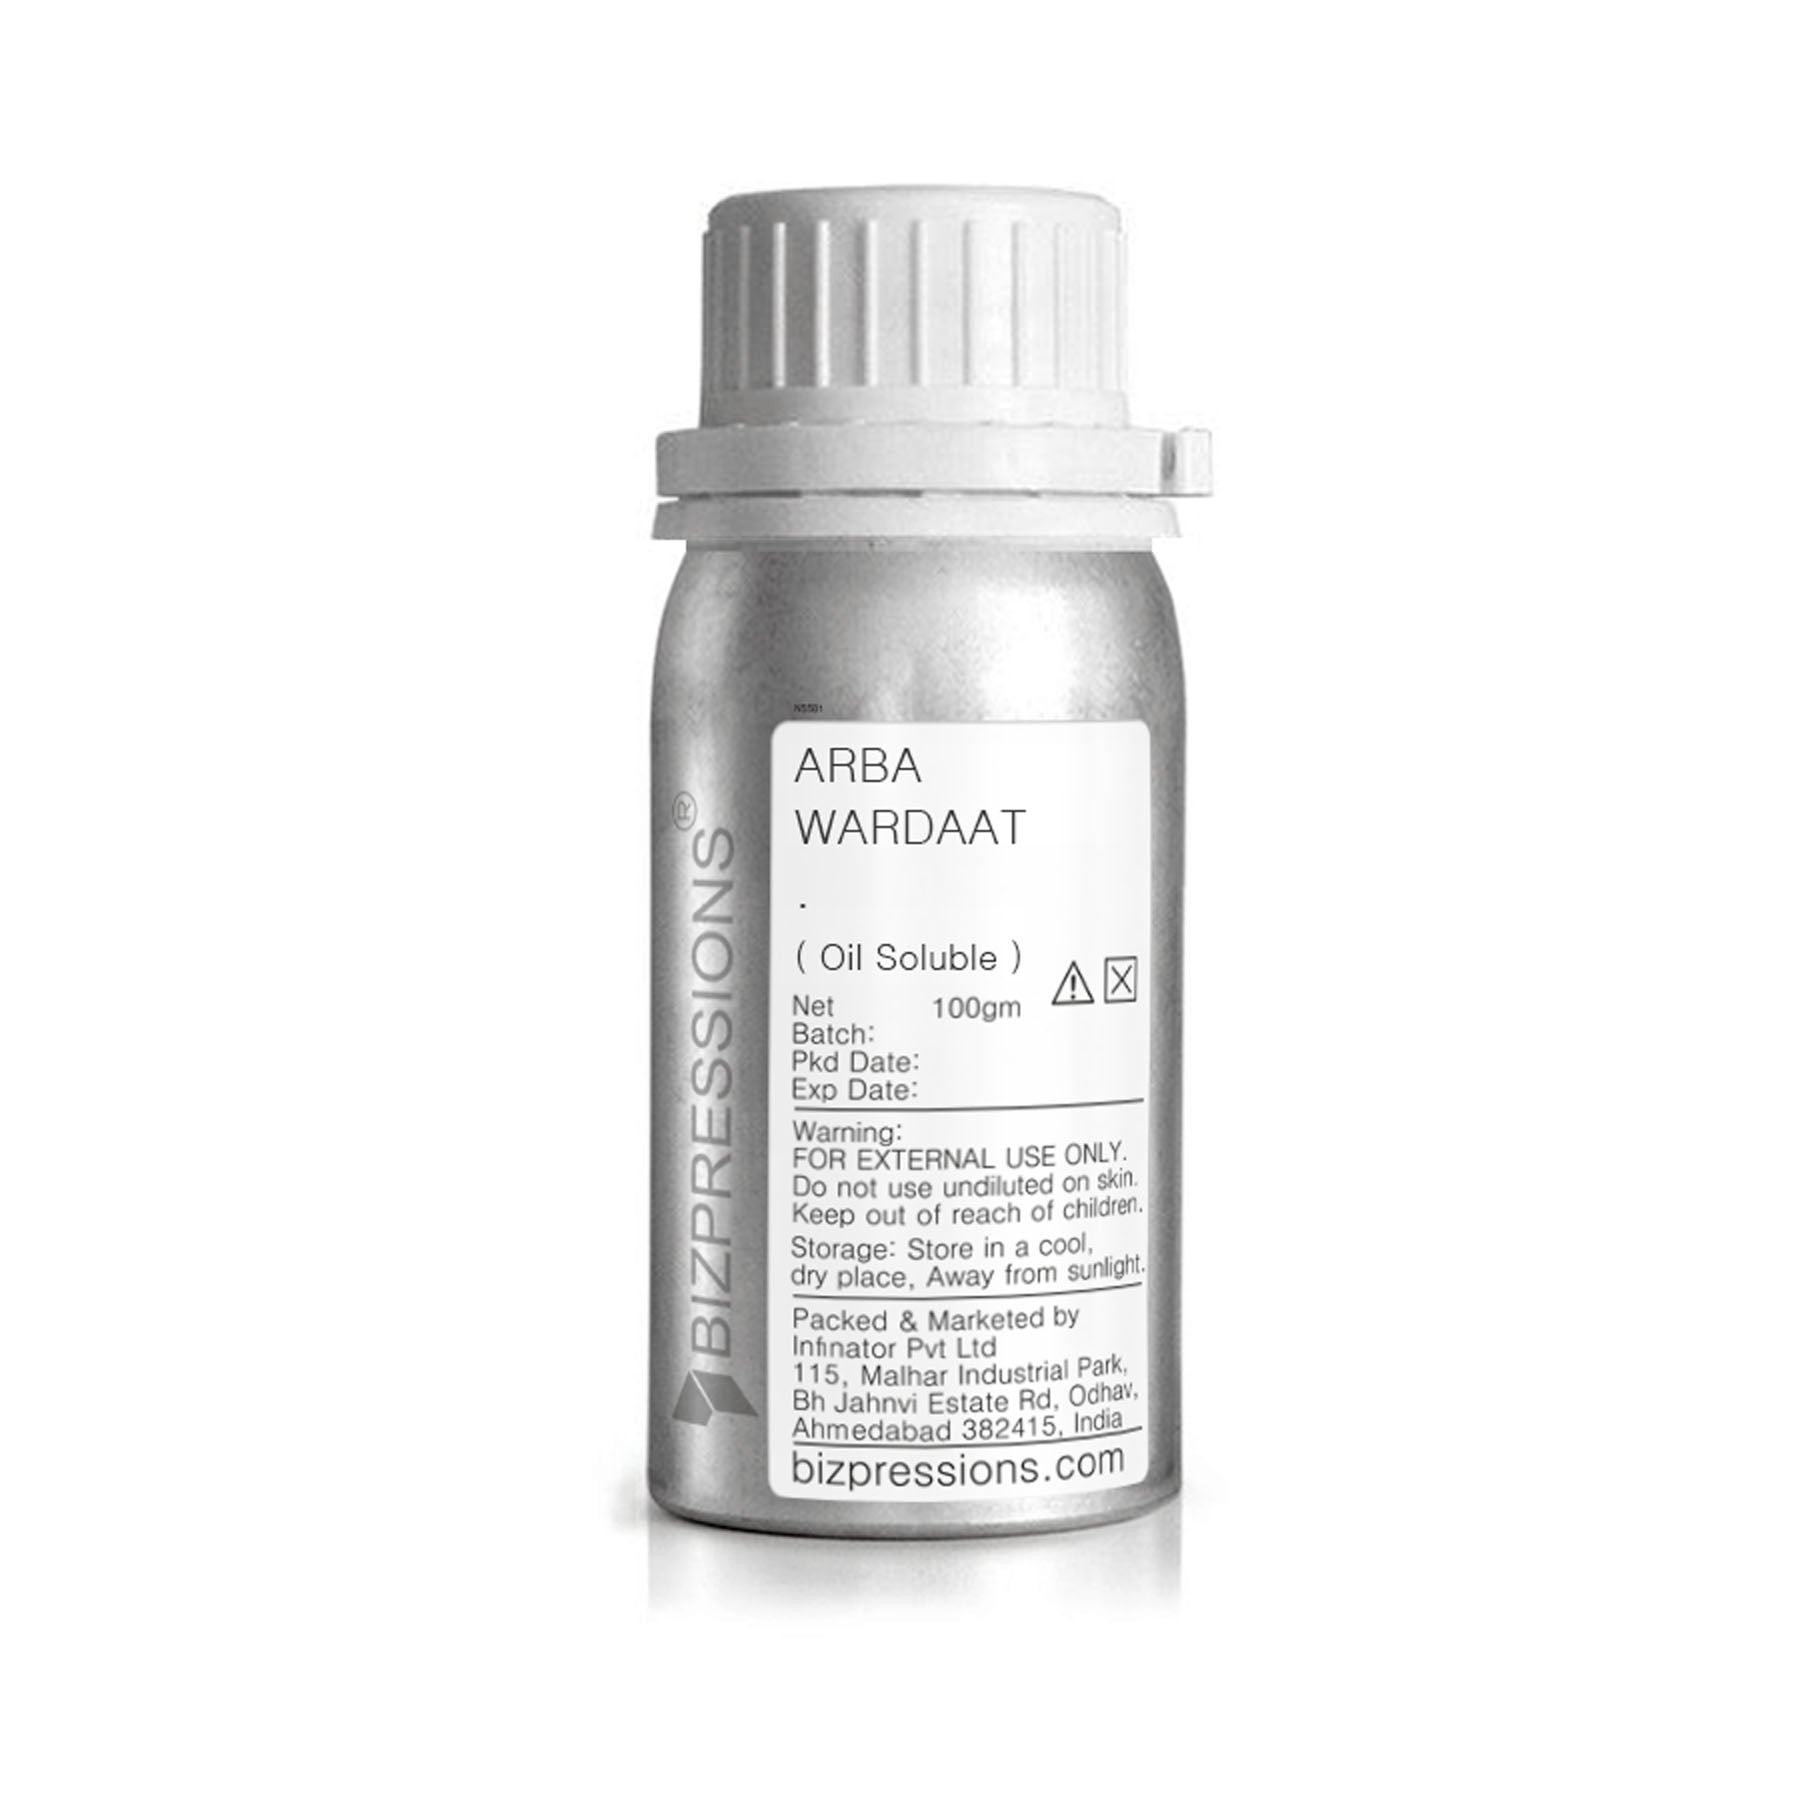 ARBA WARDAAT - Fragrance ( Oil Soluble ) - 100 gm